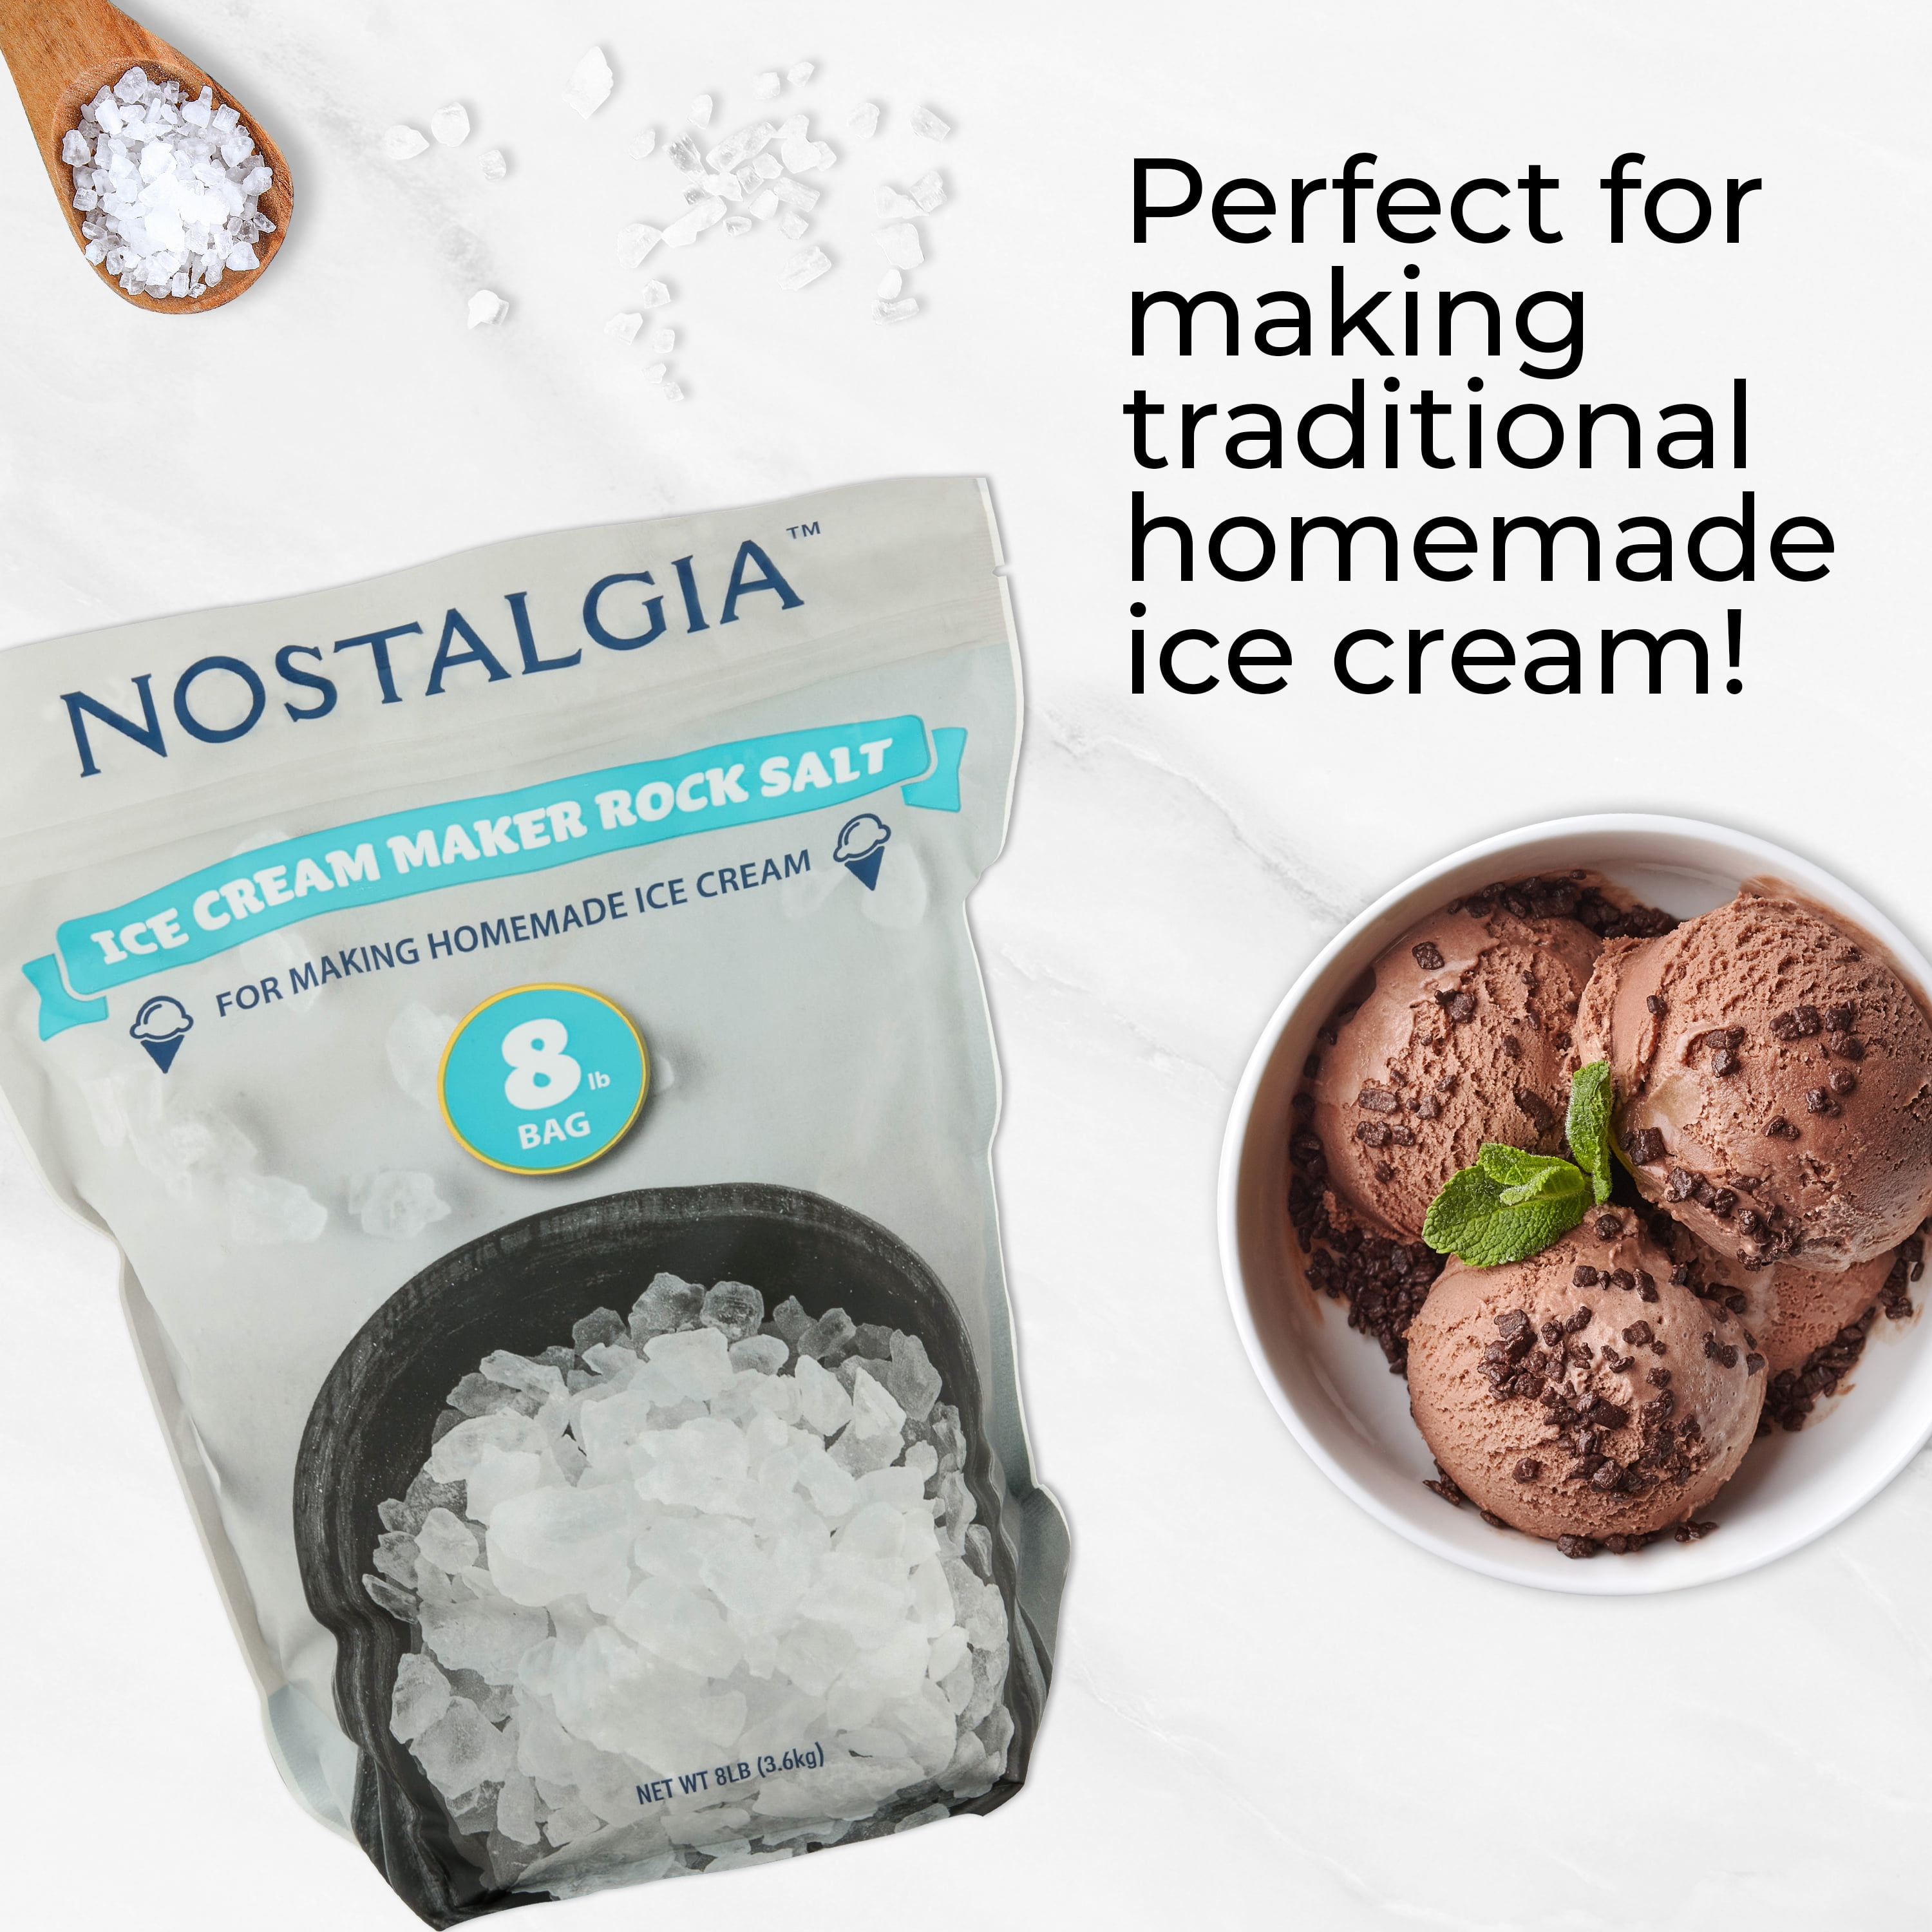 Nostalgia Ice Cream Maker Rock Salt, 8 lb RSBG8LB, Homemade Ice Cream,  Brand New